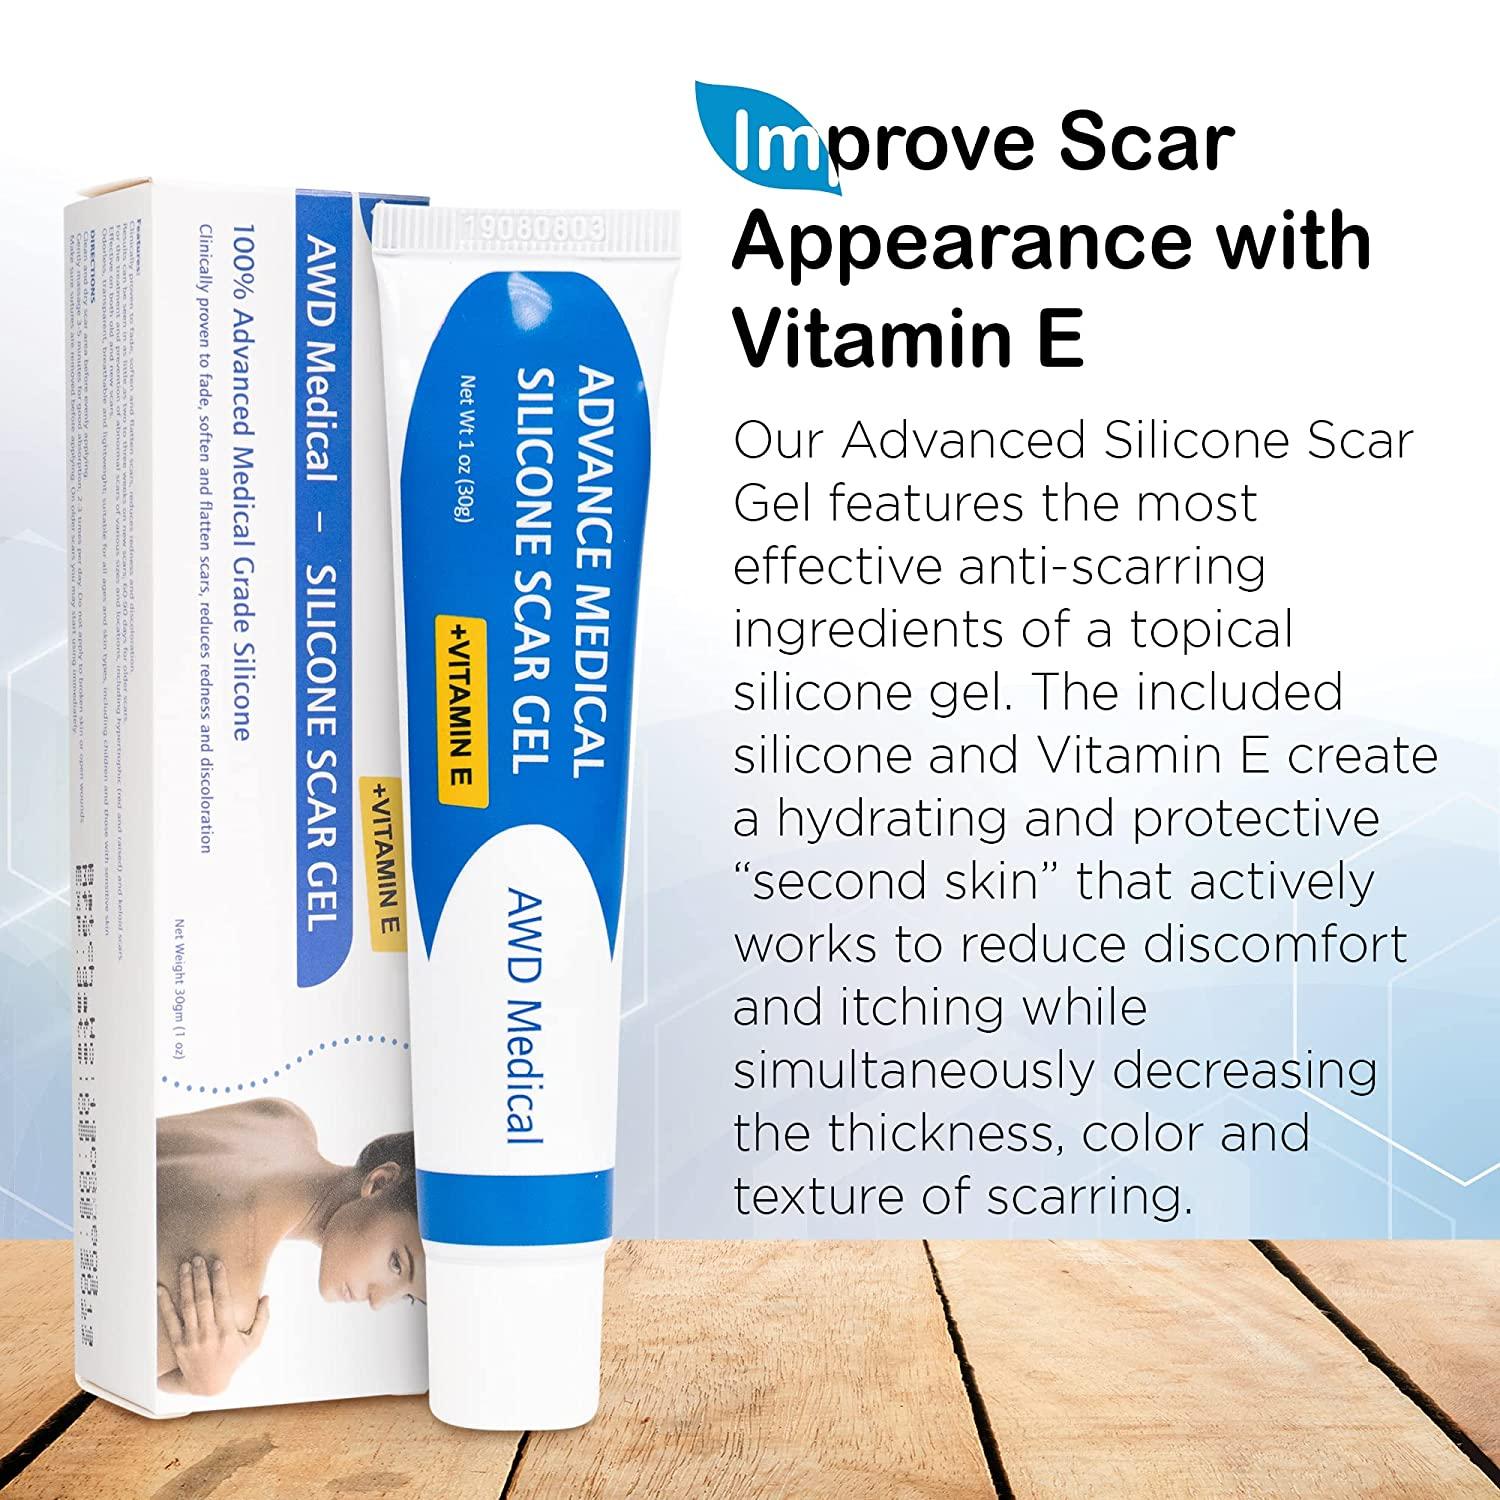 Advanced Medical-Grade Silicone Gel + Vitamin E for All Scar Types